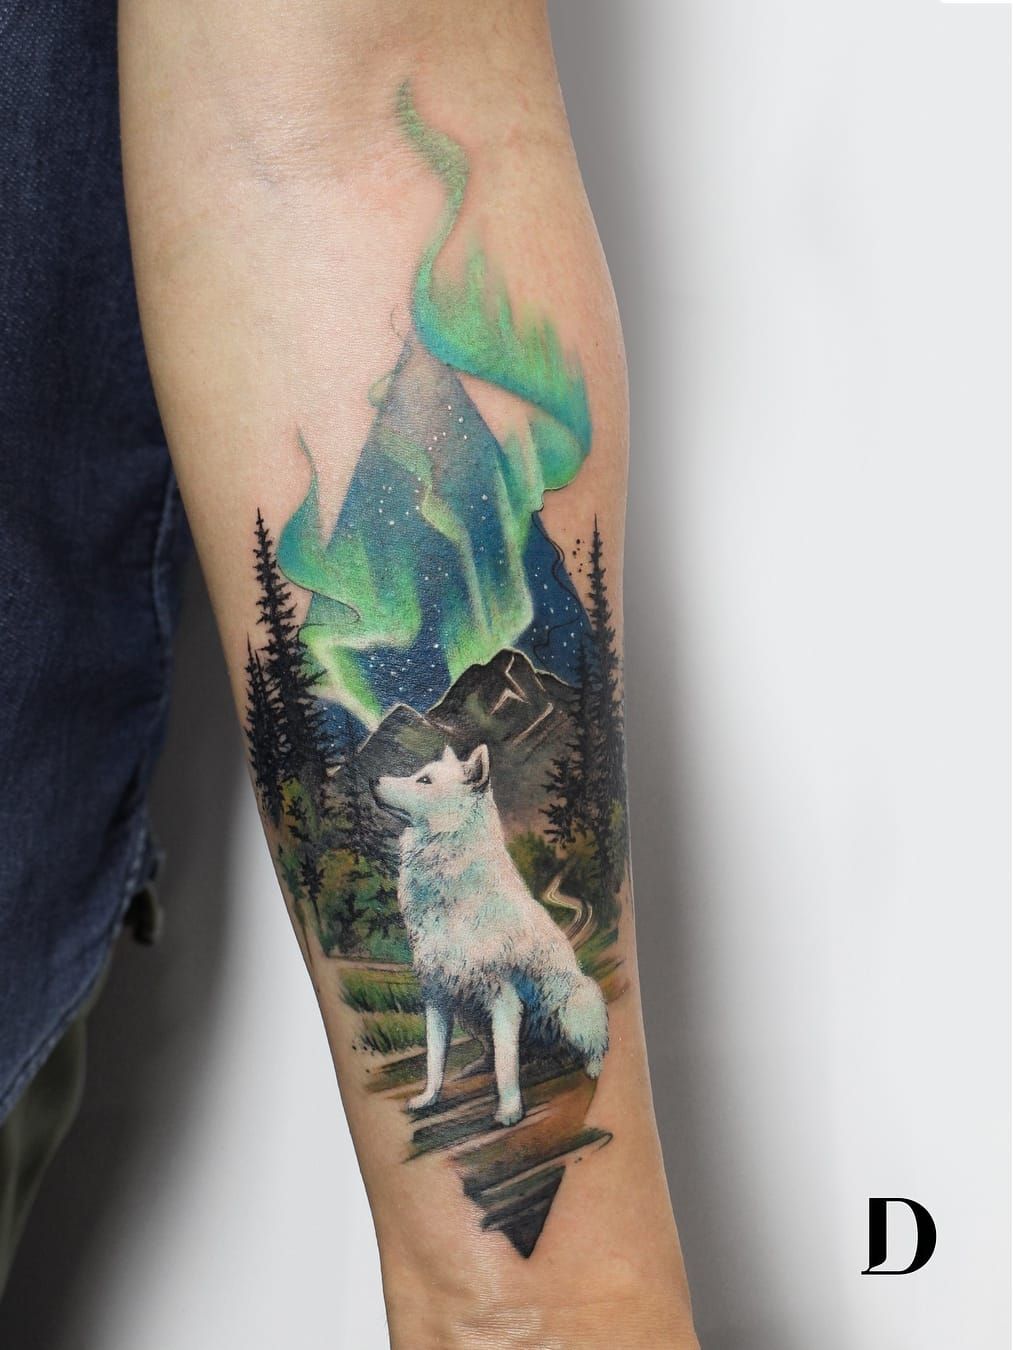 Wolf with scenery tattoo.............. - - Tattoo done by - Aruna khanna -  - Follow - @aruna_tattooist for more amazing tattoos - - Dm us… | Instagram